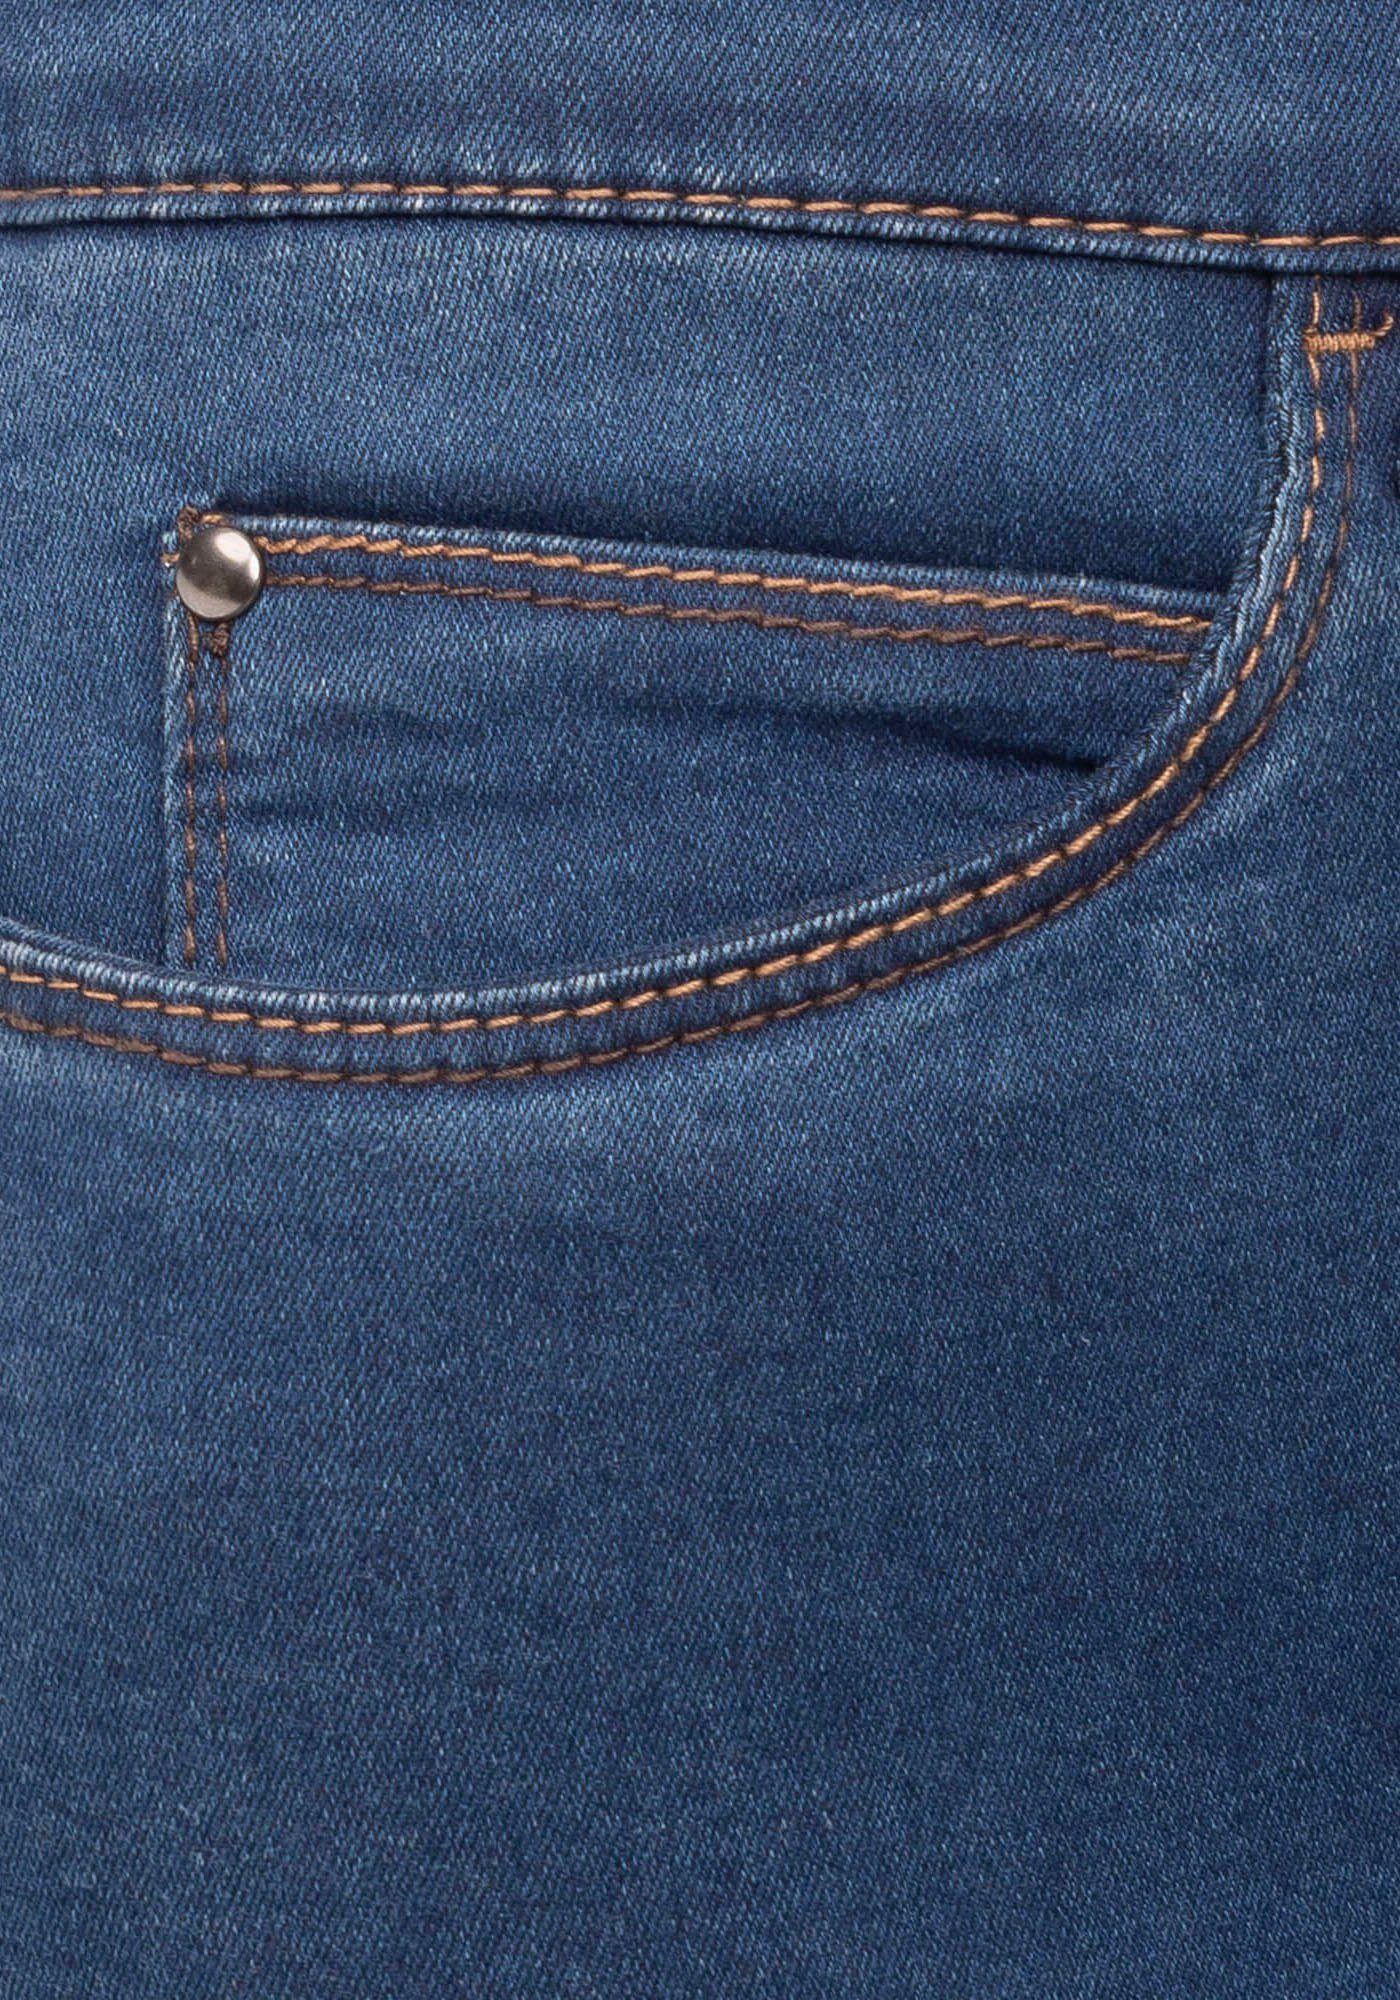 wonderjeans Slim-fit-Jeans Classic-Slim stone Klassischer gerader washed blue Schnitt